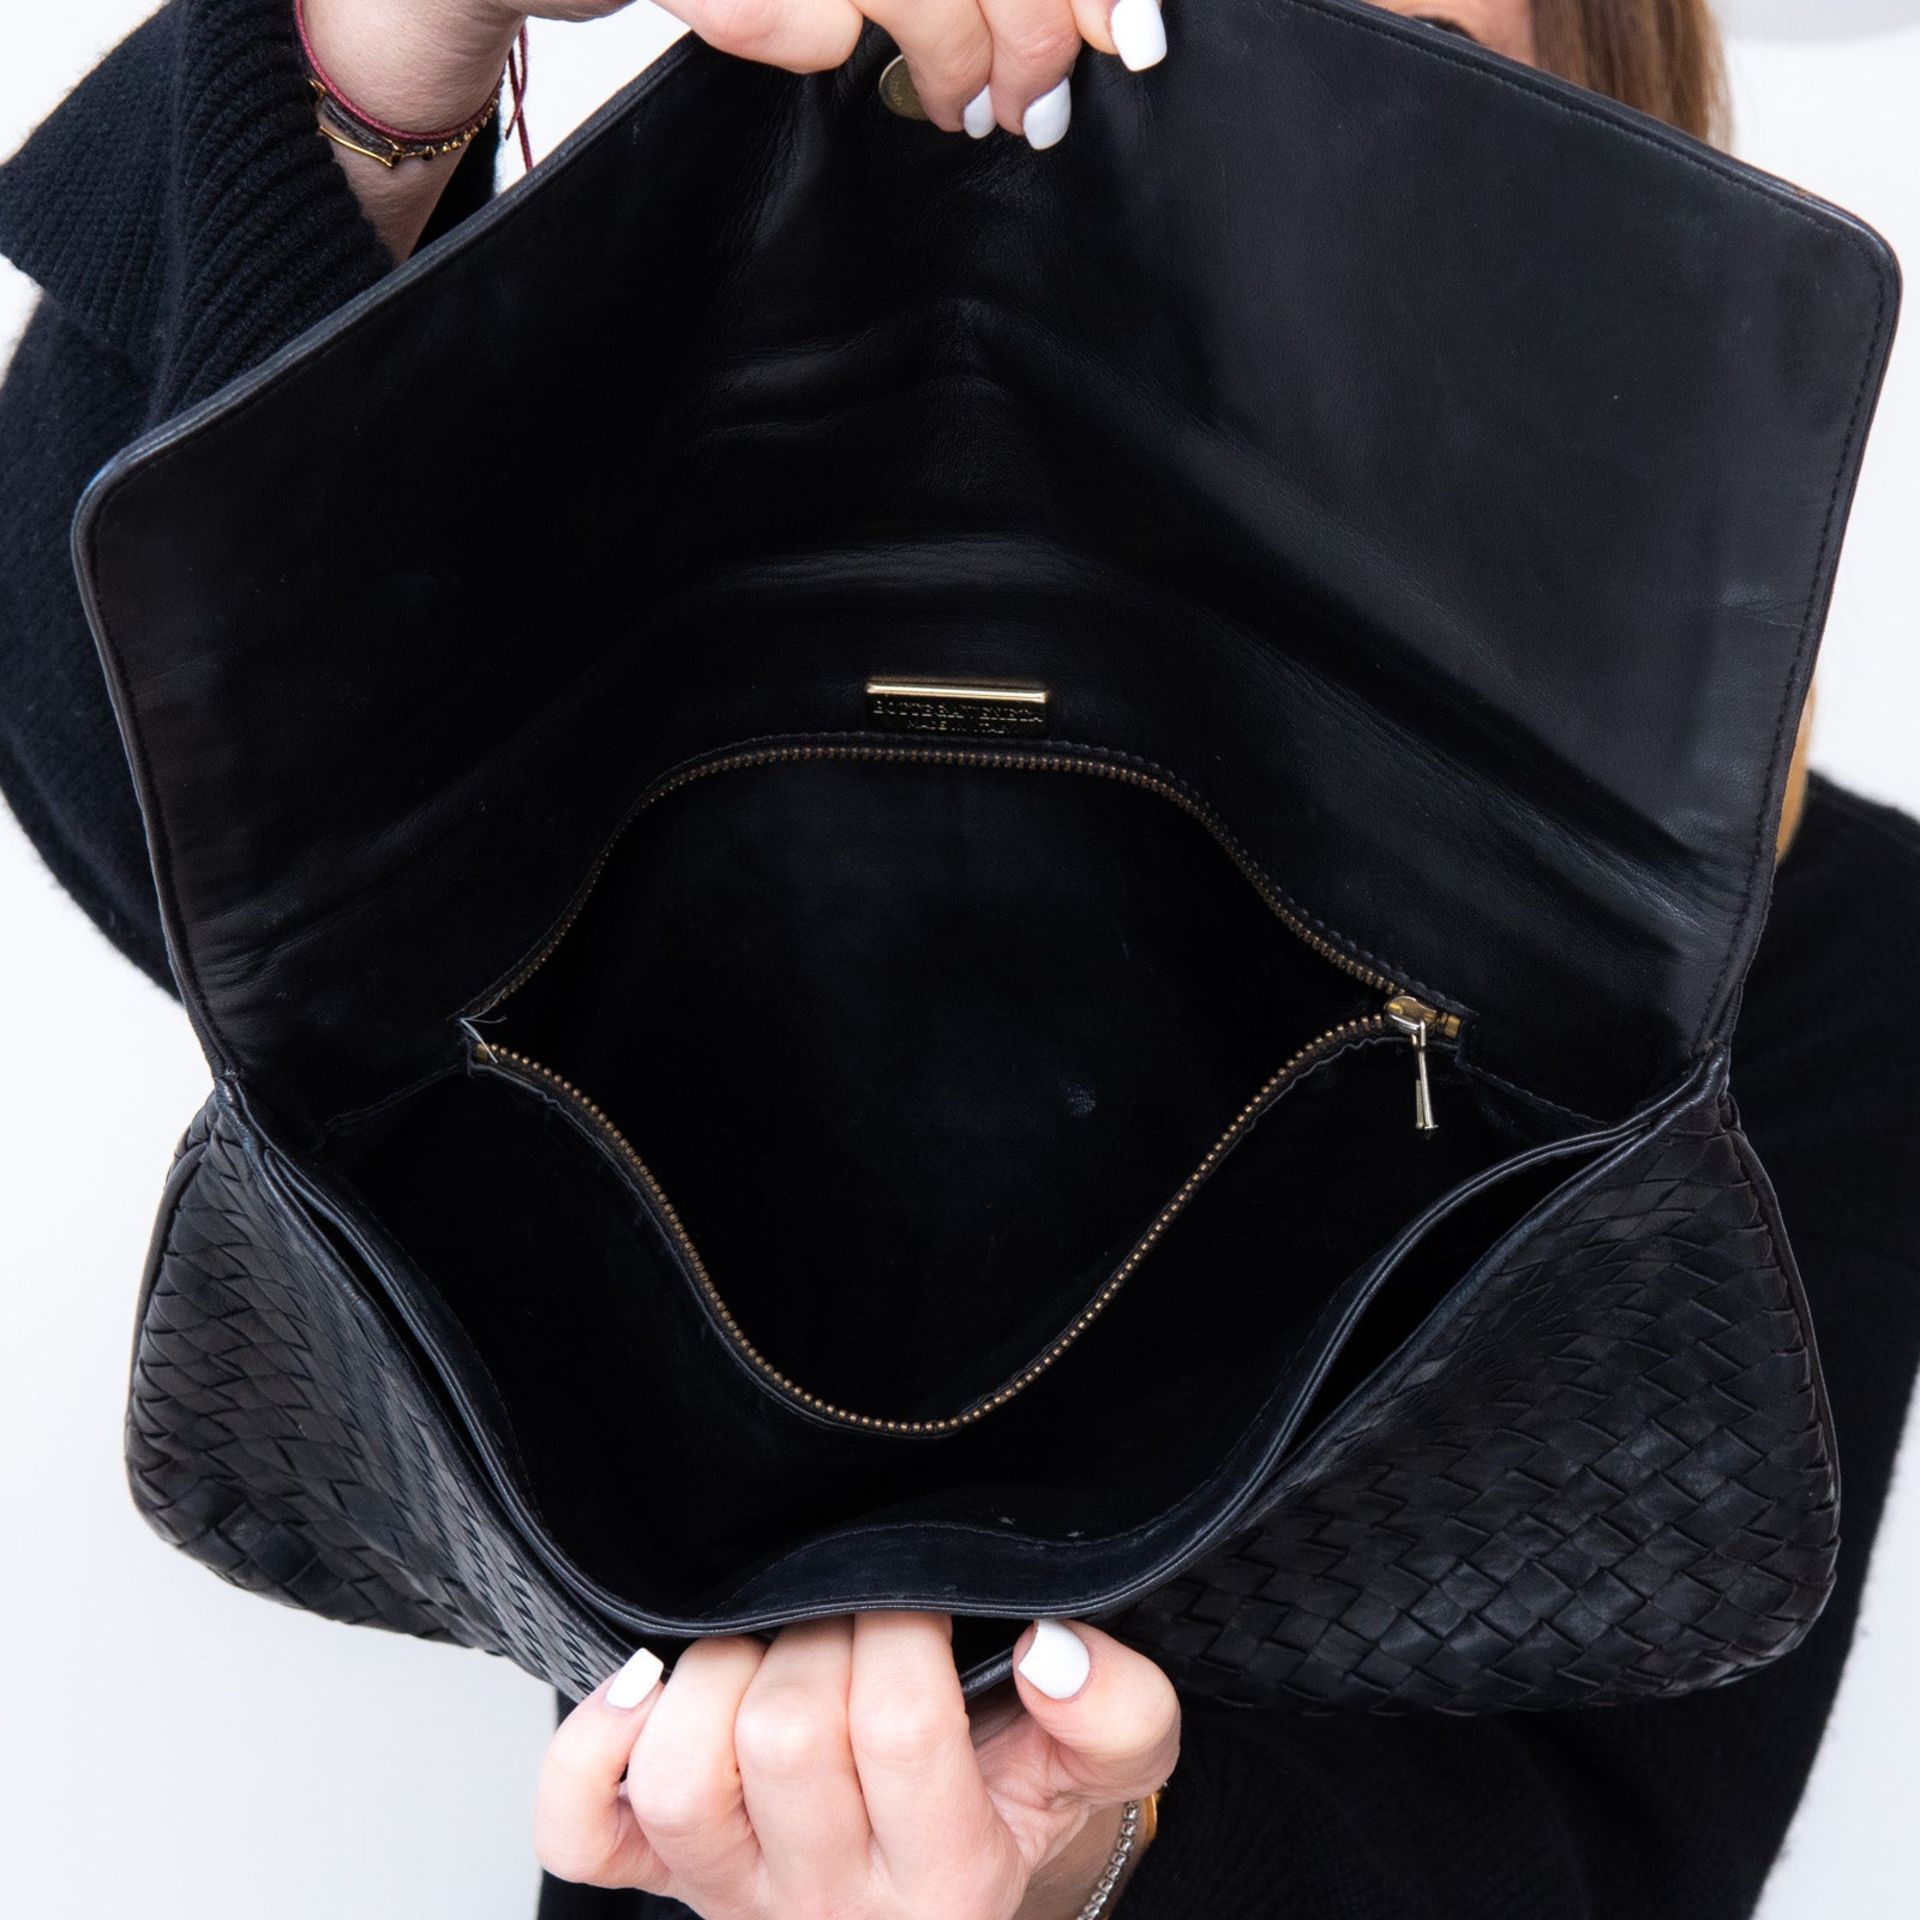 Bottega Veneta Black Leather Clutch Bag - Image 6 of 6